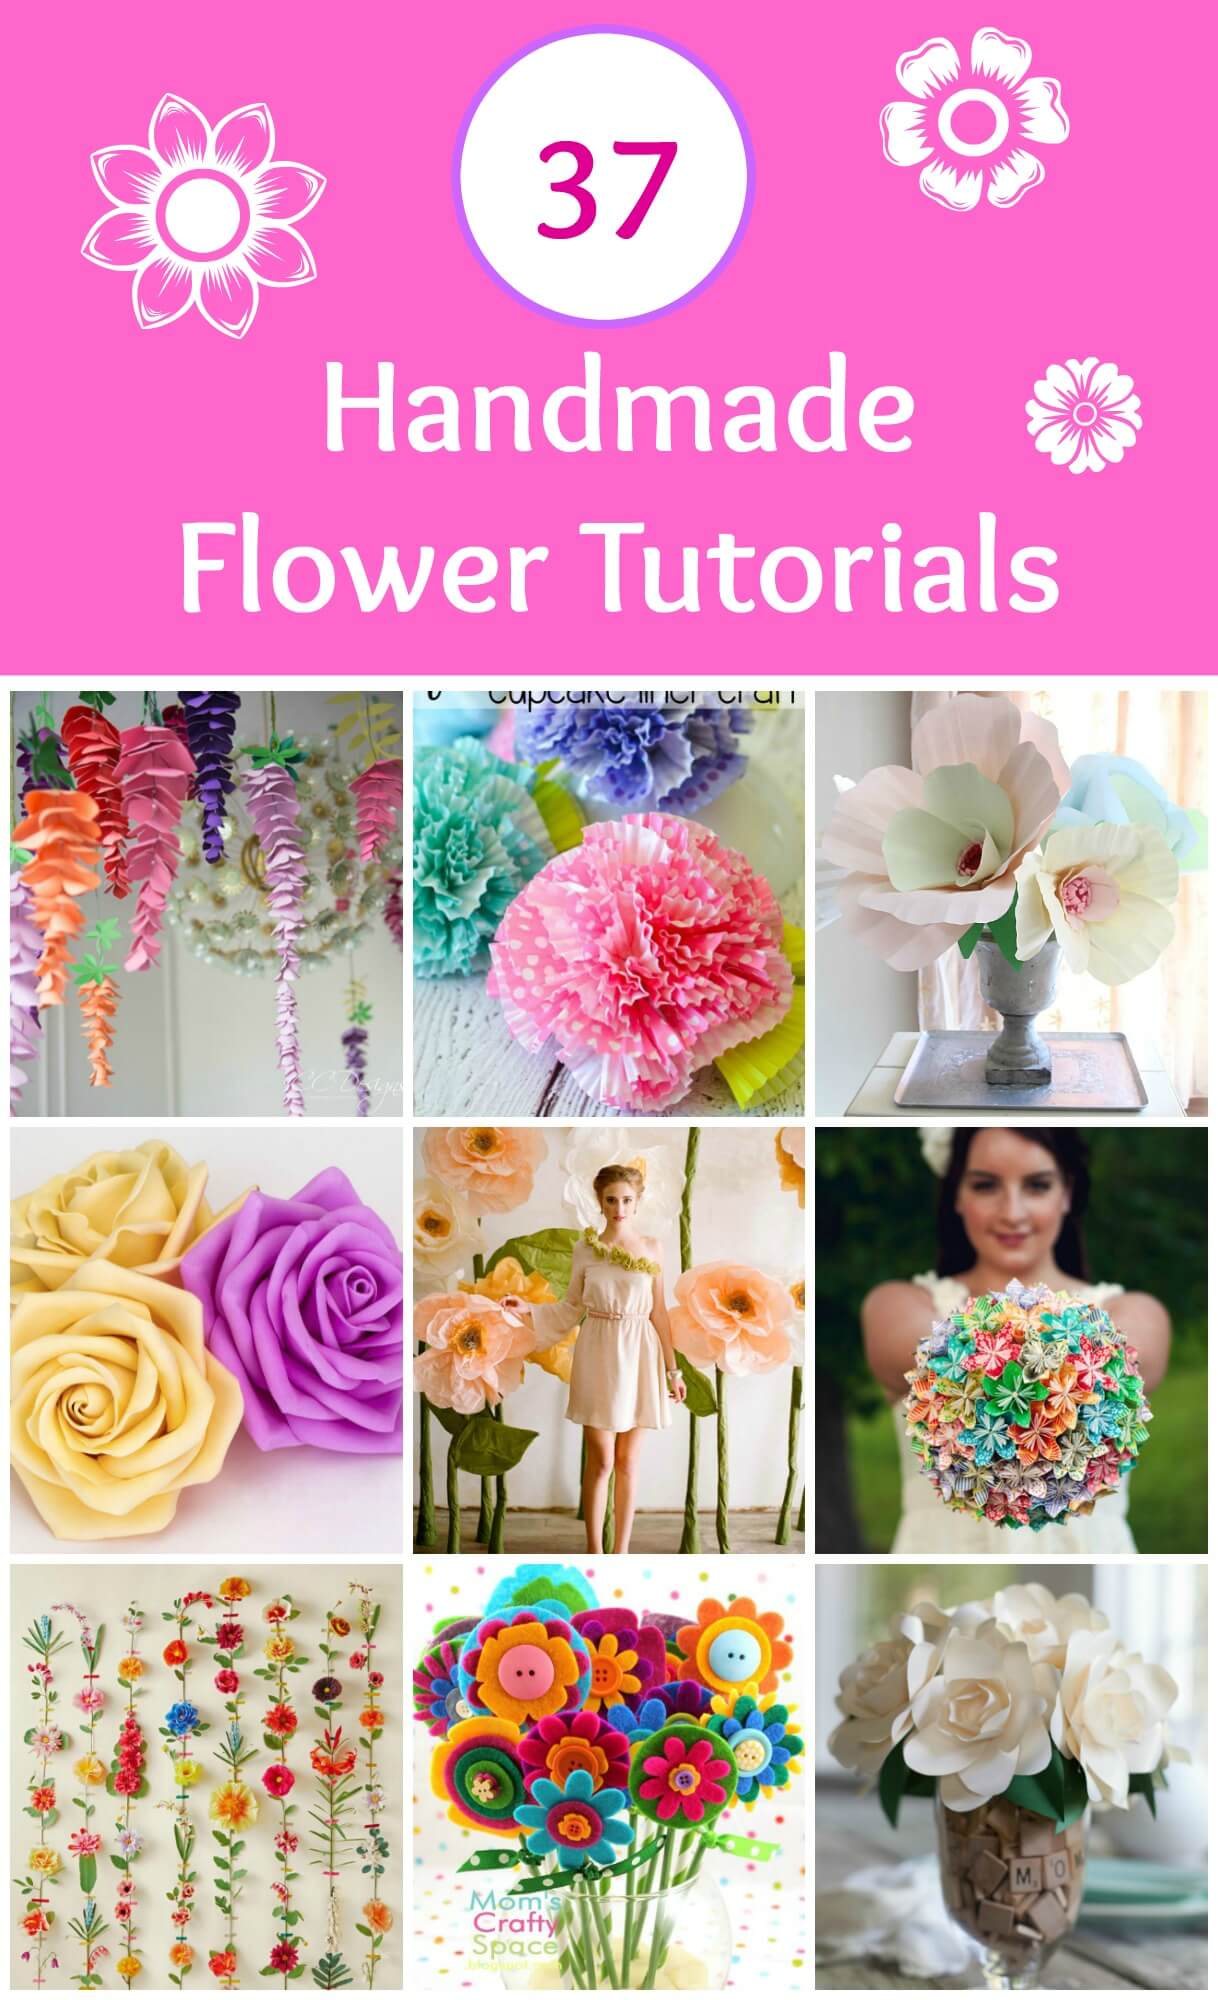 Handmade flower tutorials